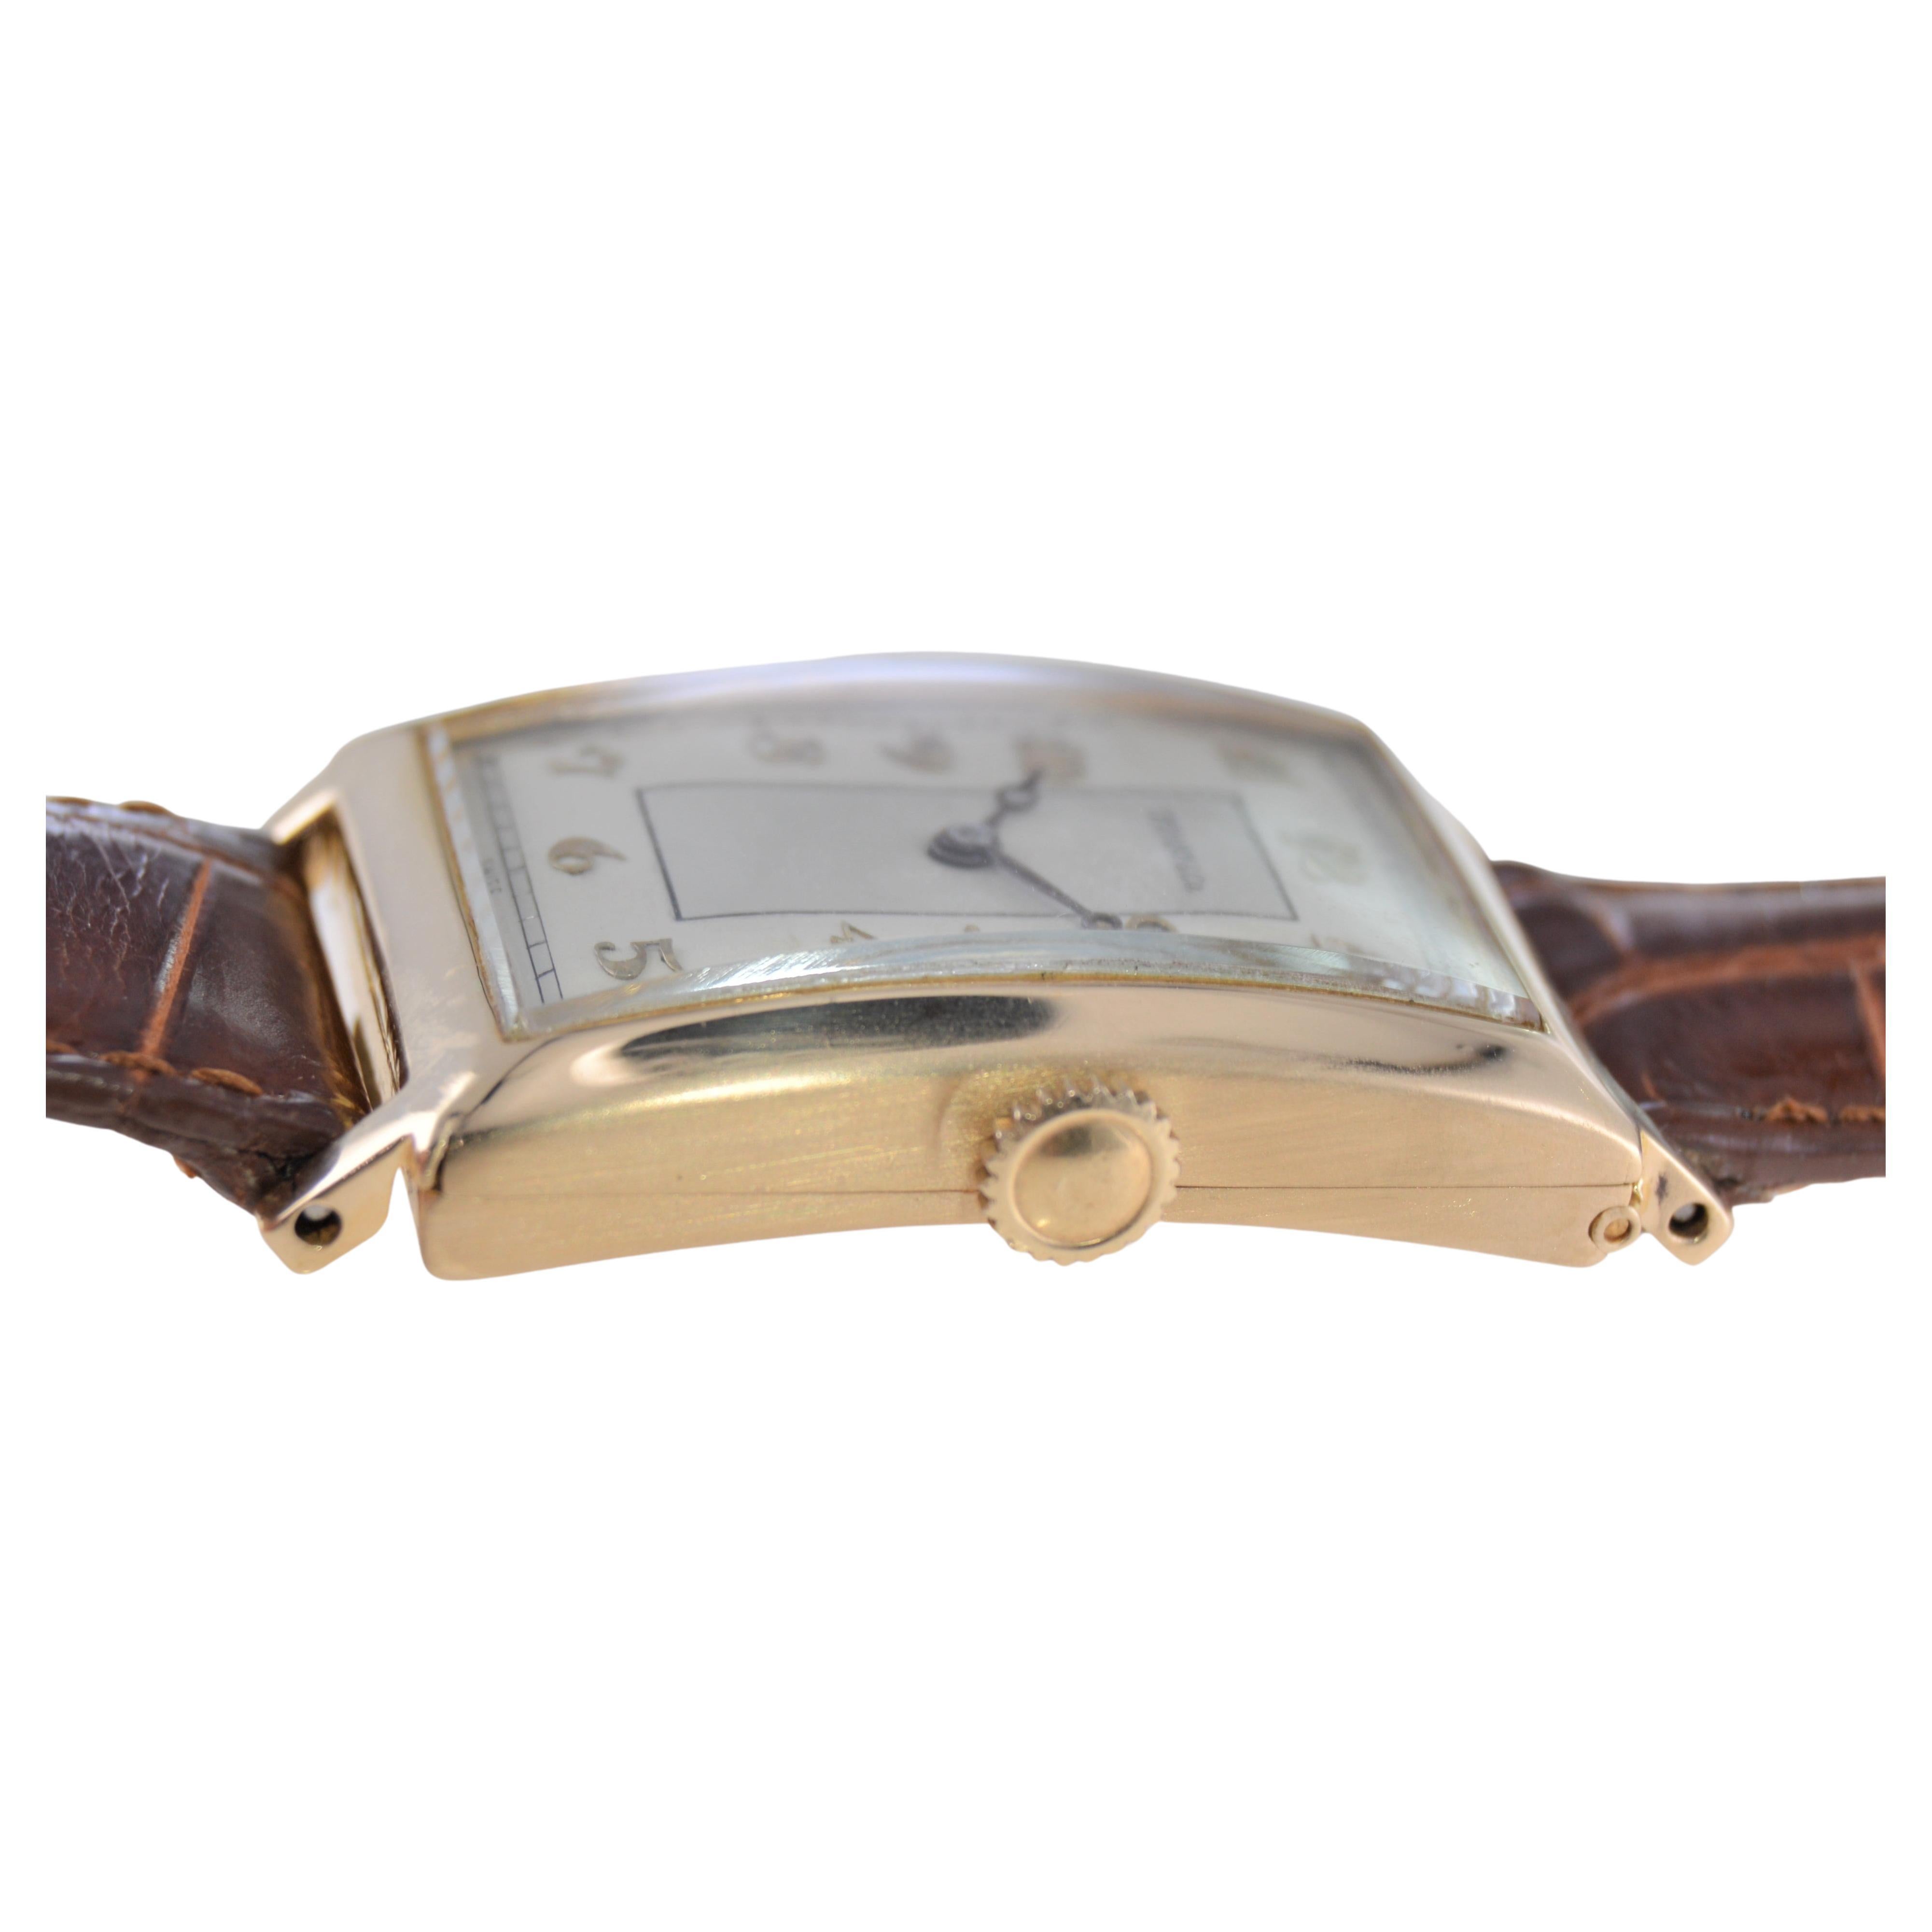 Tiffany & Co. by International 18 Karat Gold Art Deco Tank Watch, circa 1930 For Sale 3